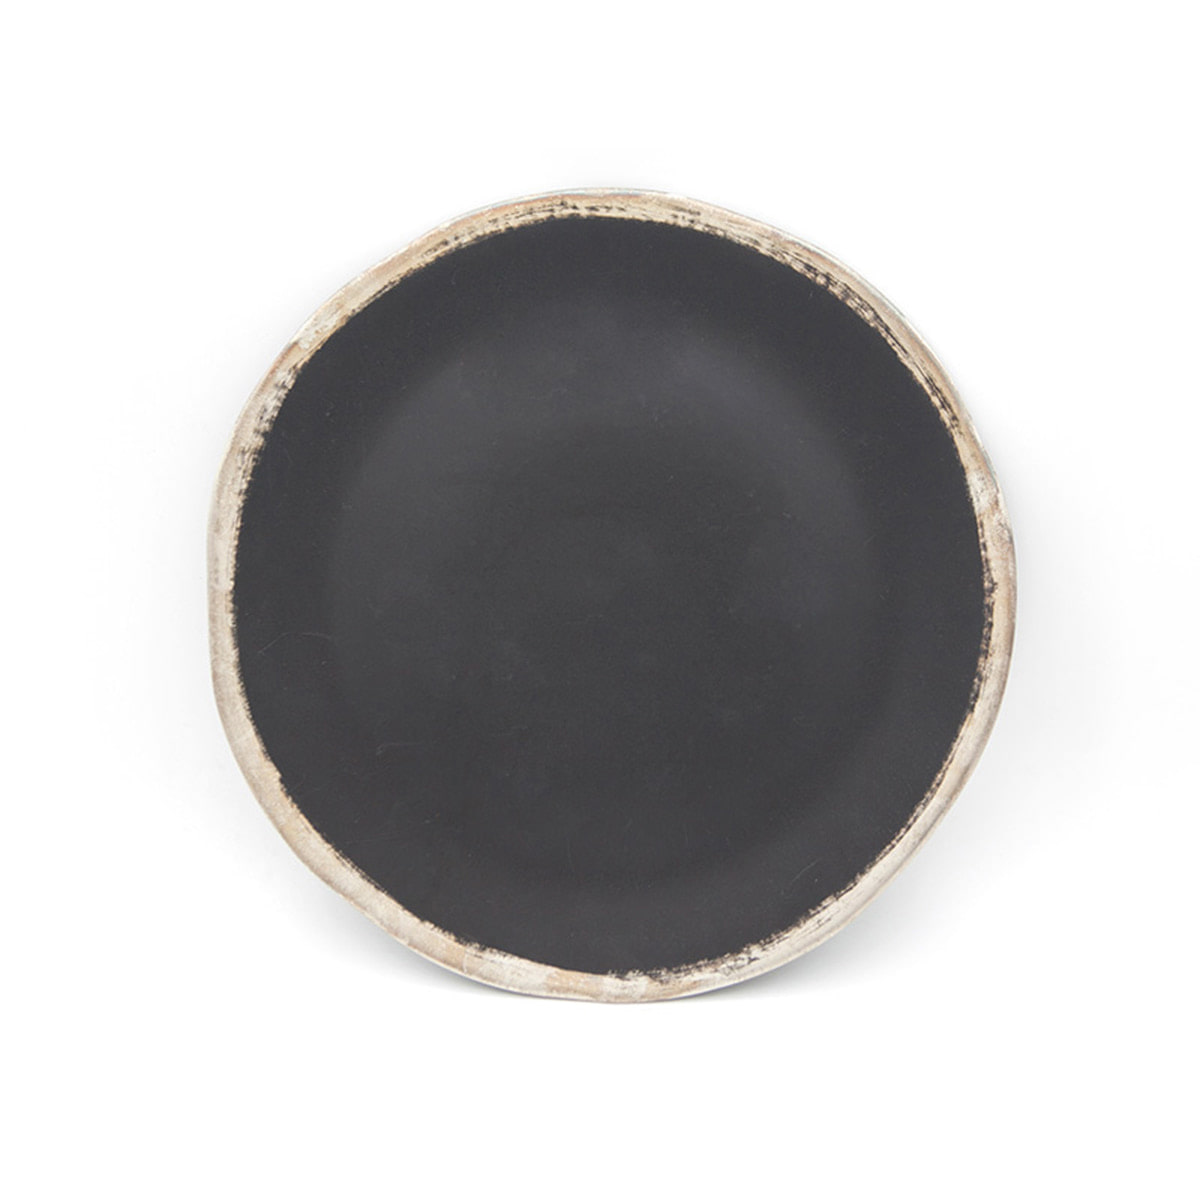 JARS Silver Rim Round Plate  잘스 은 테두리 원형 접시 (Ø31) (블랙)MADE  IN  FRANCE